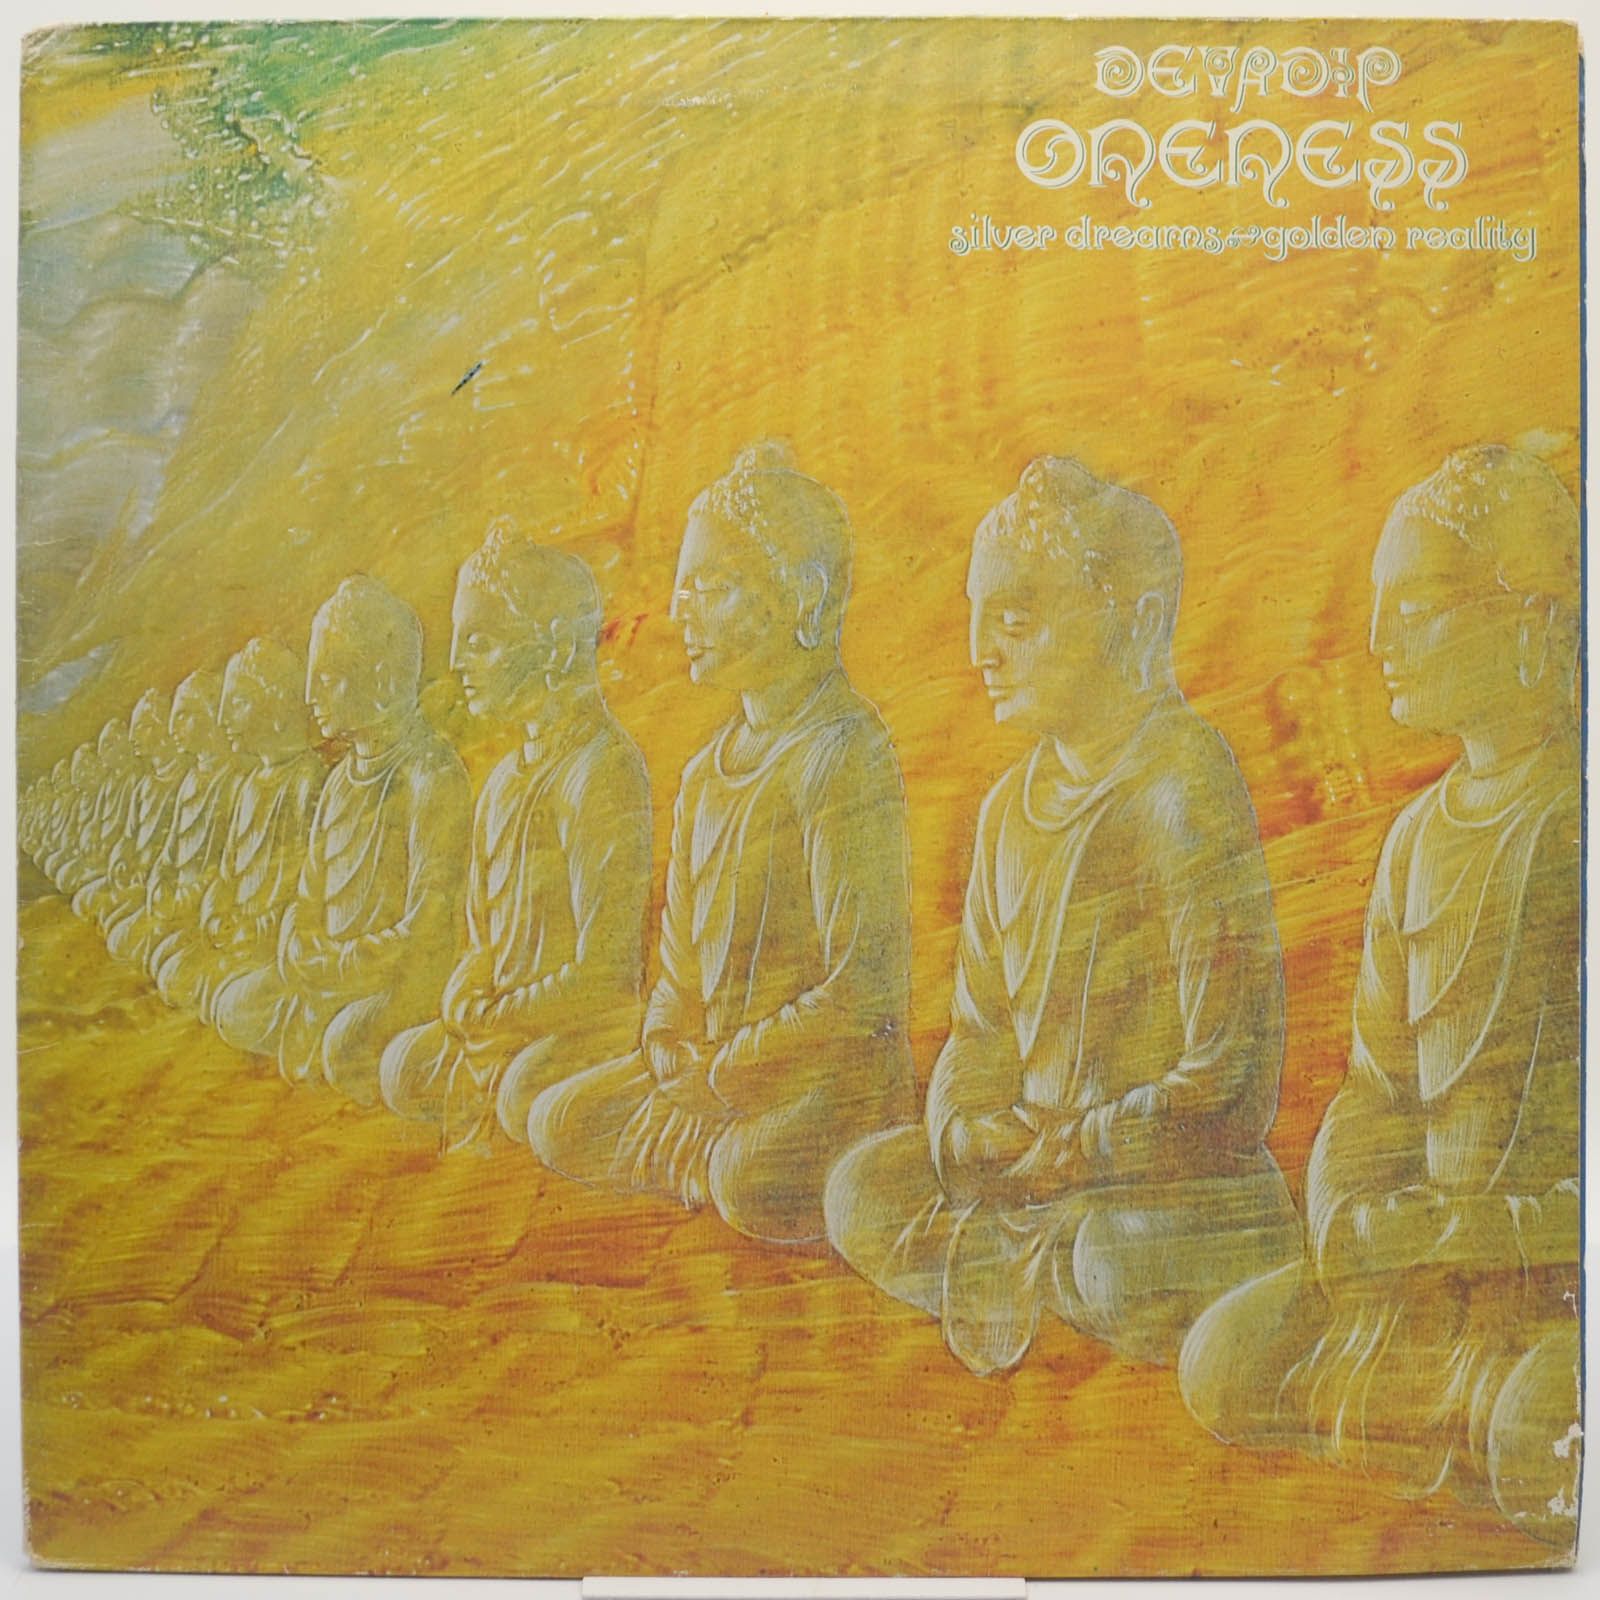 Oneness (Silver Dreams - Golden Reality), 1979